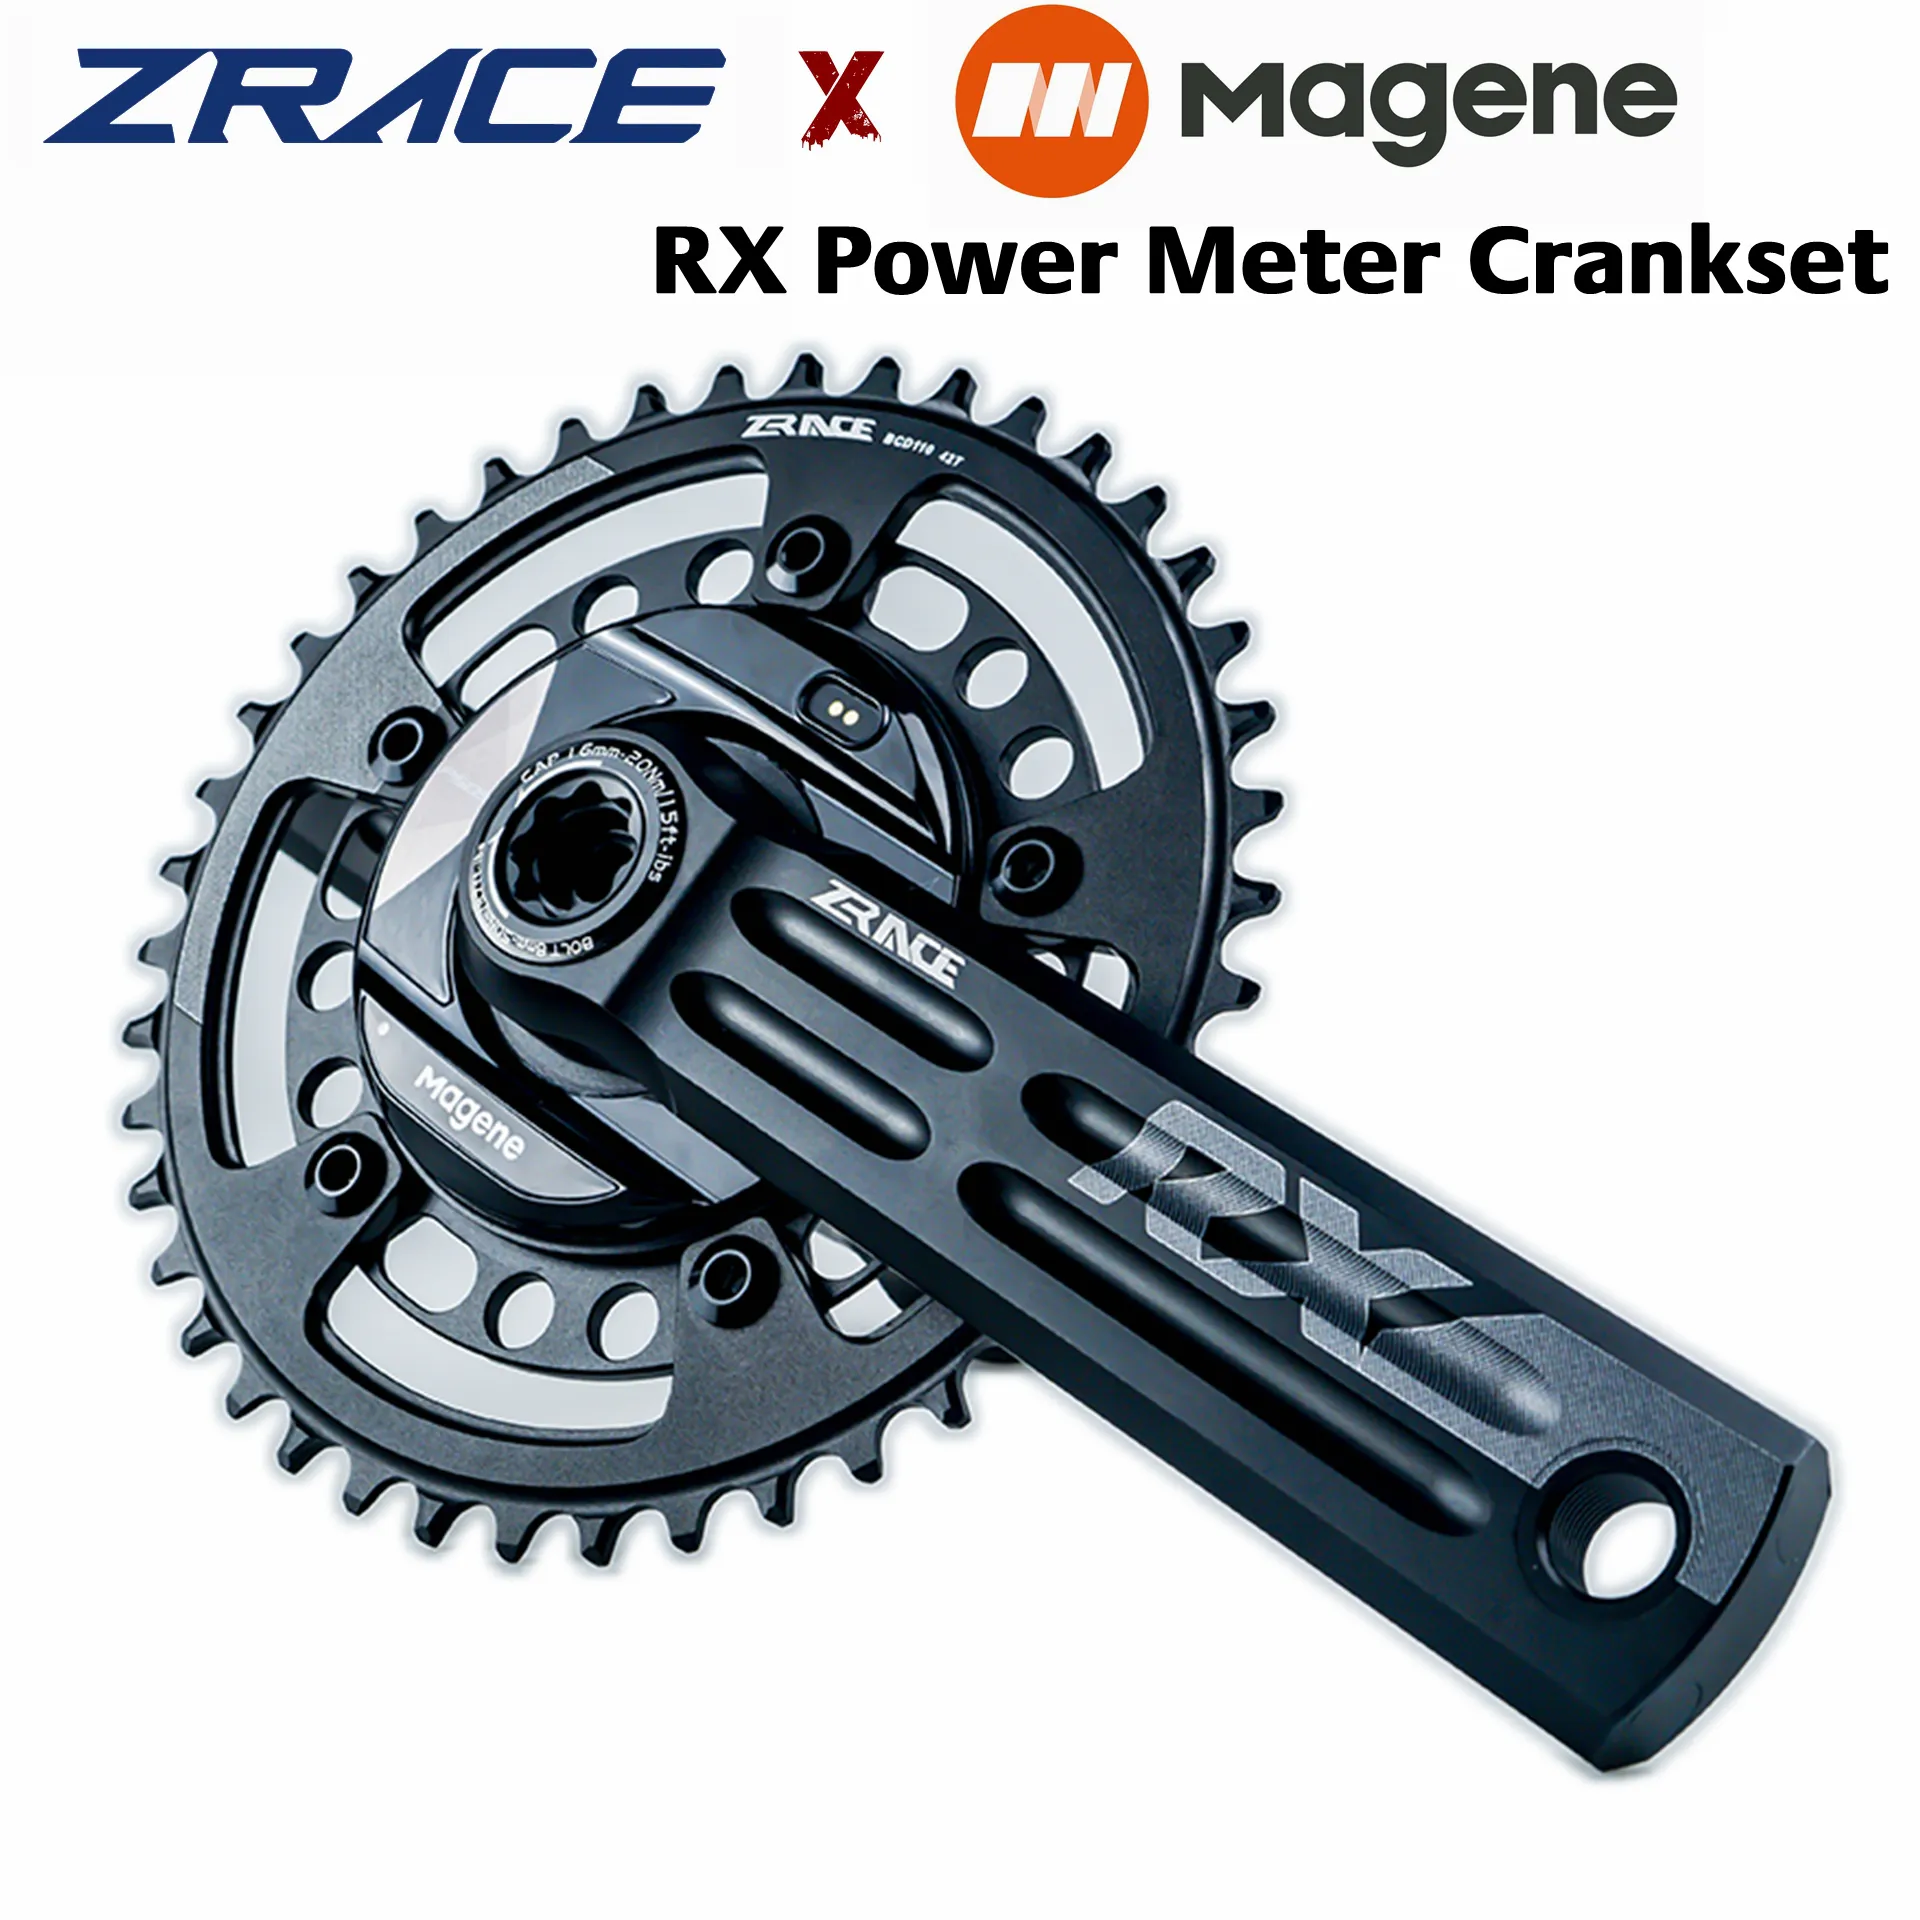 ZRACE x MAGENE RX Power Meter Crankset 2 x 10 / 11 / 12 Speed Chainset, DUB Bottom bracket,Power Crank,P505 Power Meter Spider